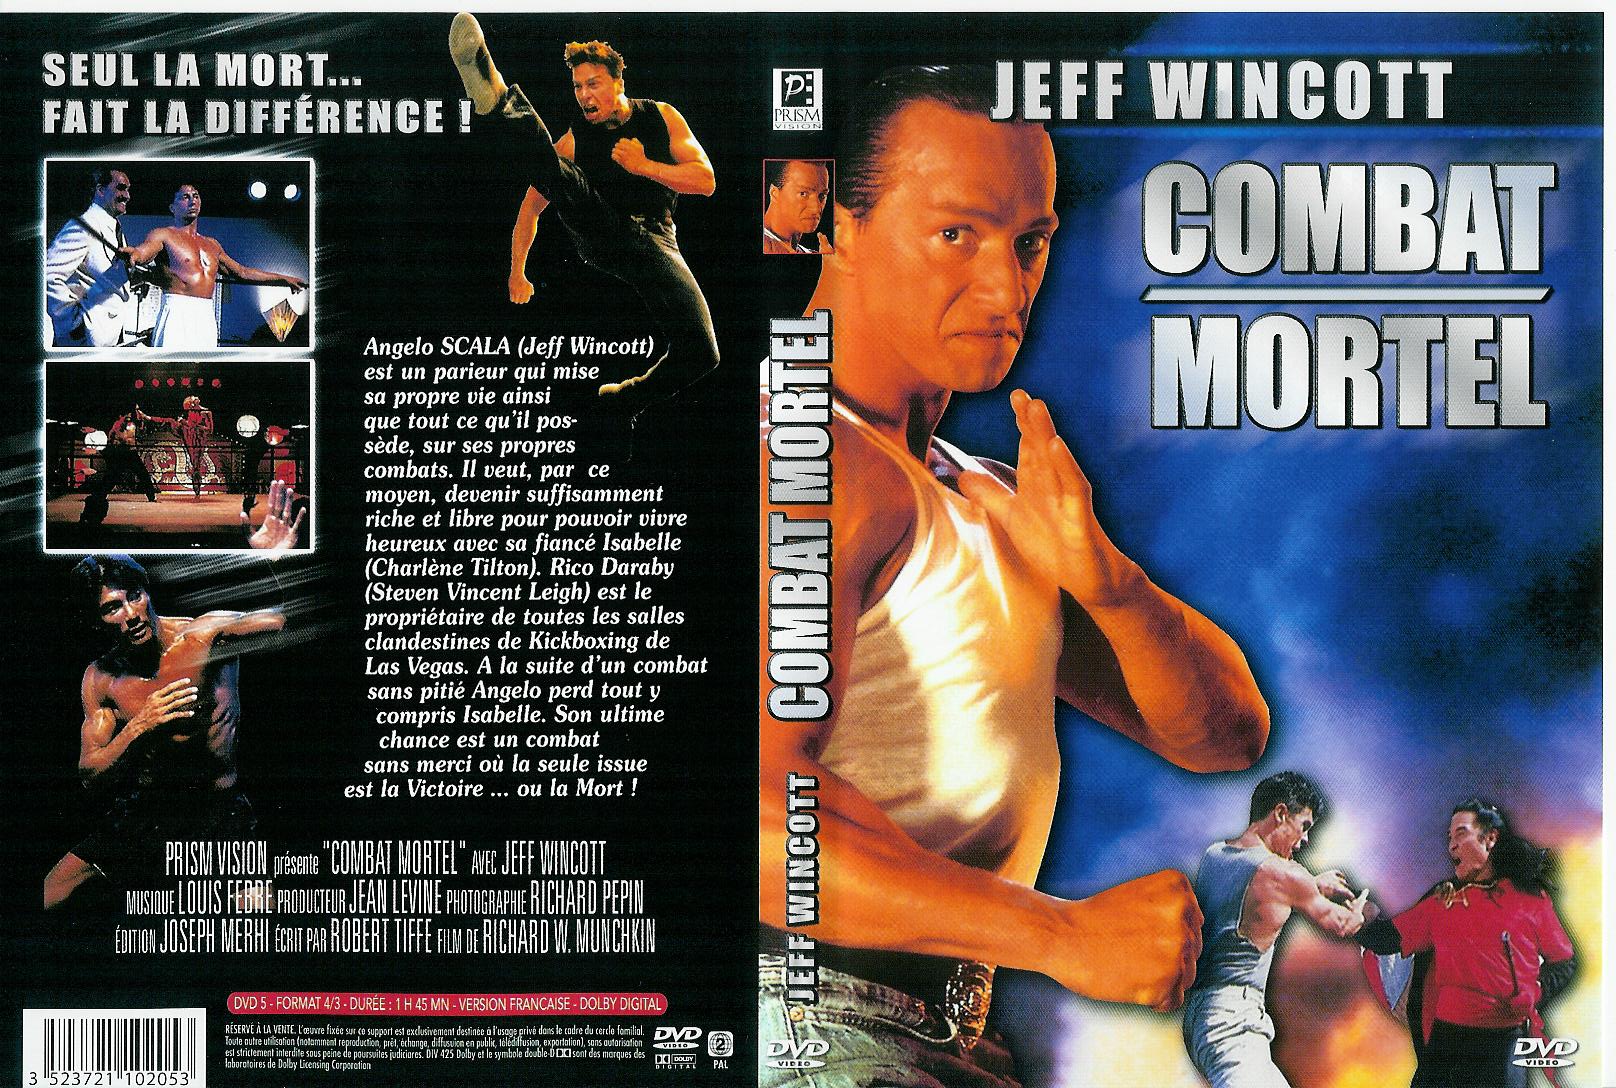 Jaquette DVD Combat mortel